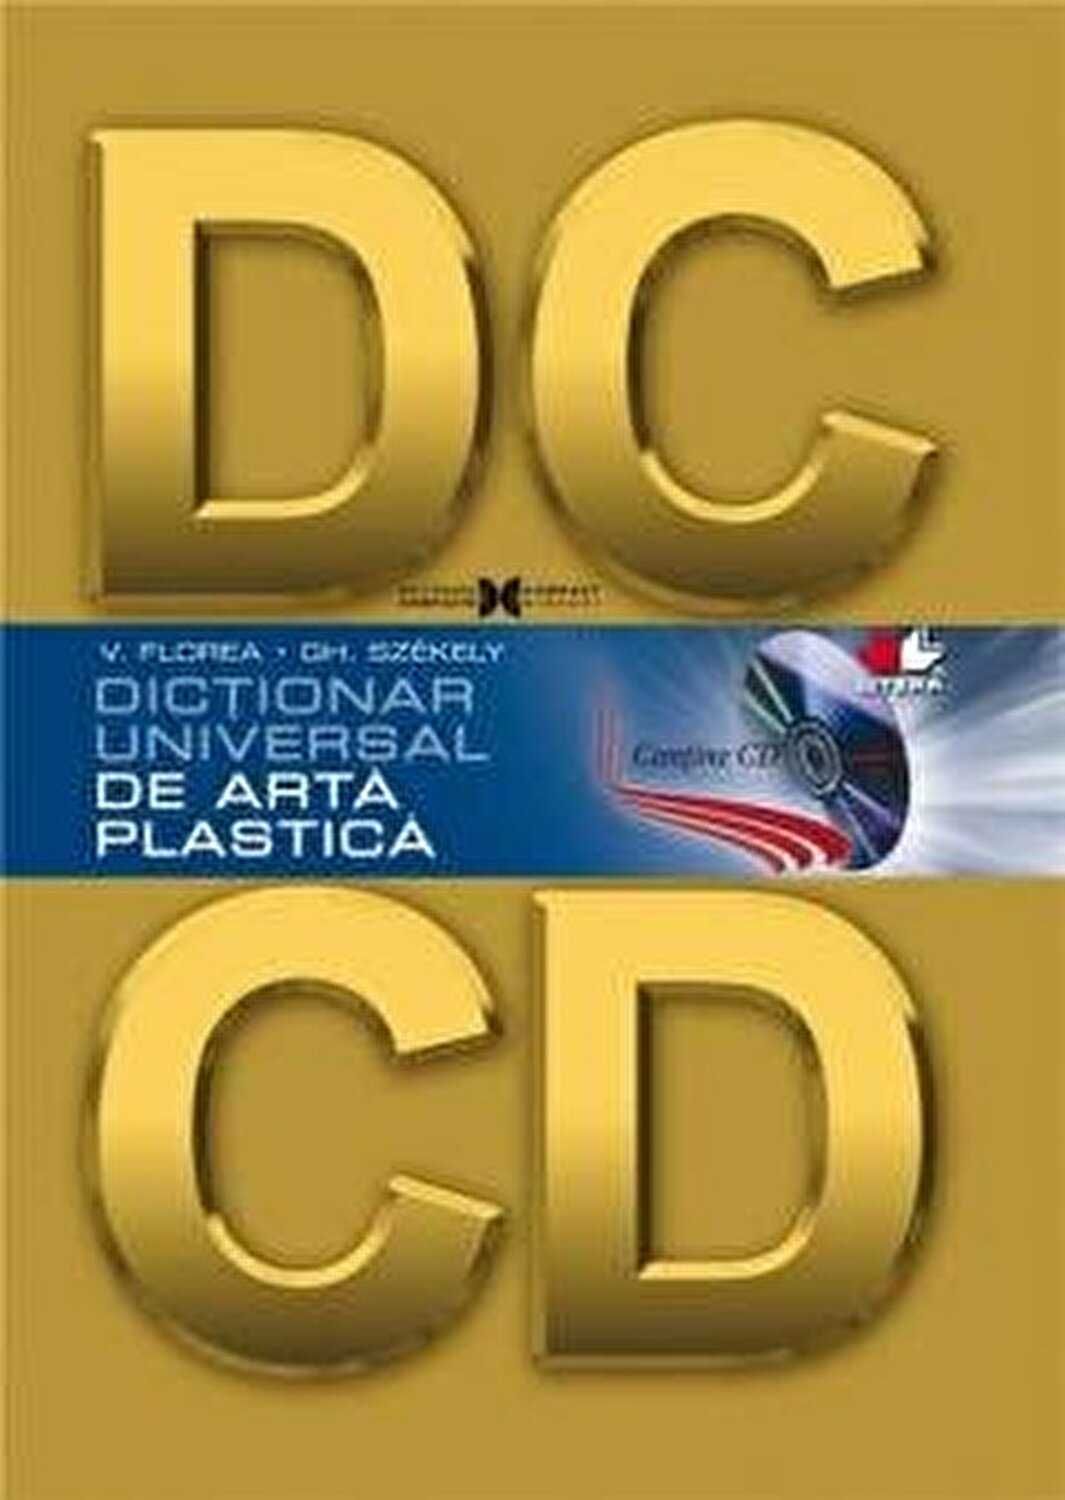 Dictionar universal de arta plastica + CD (Romanian Edition)